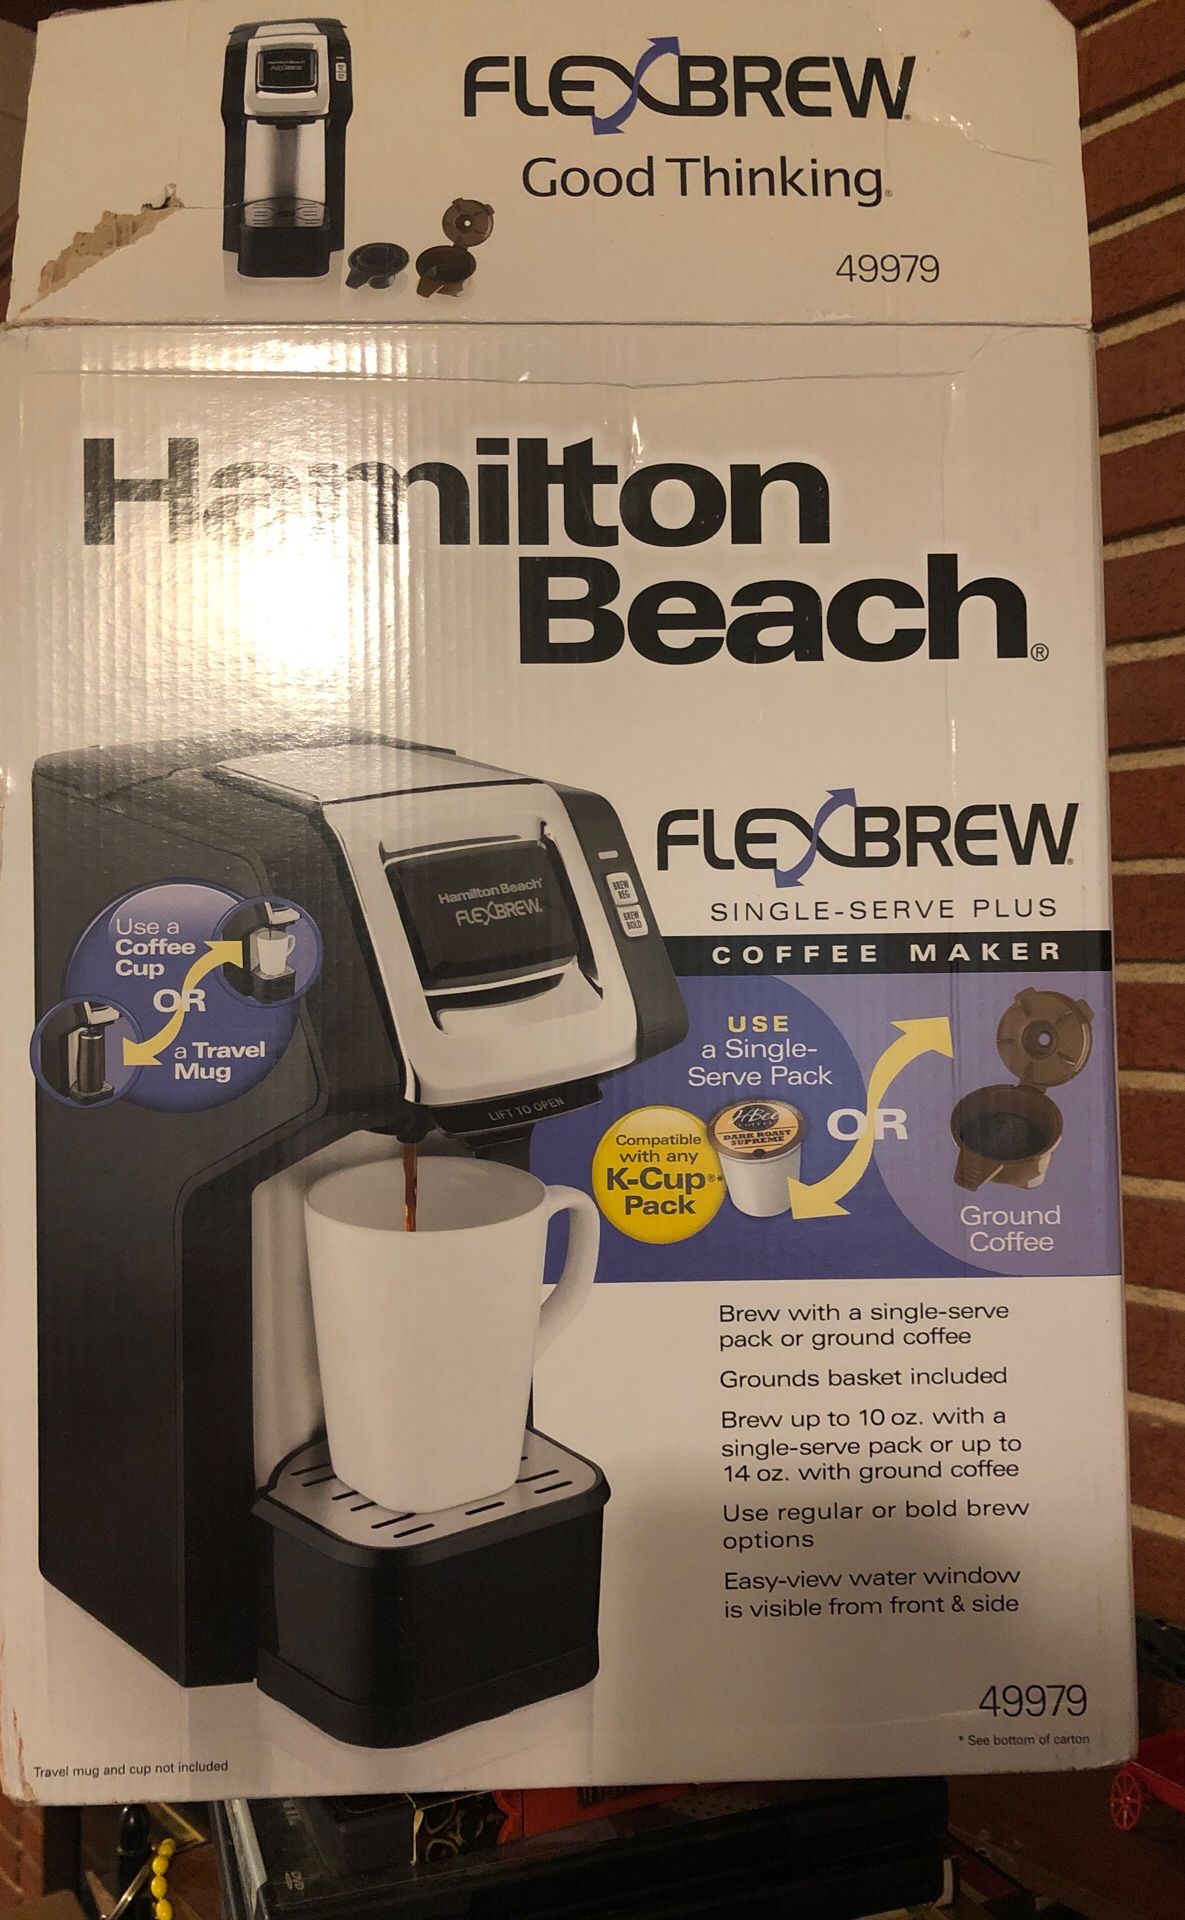 Hamilton beach flex brew coffee maker